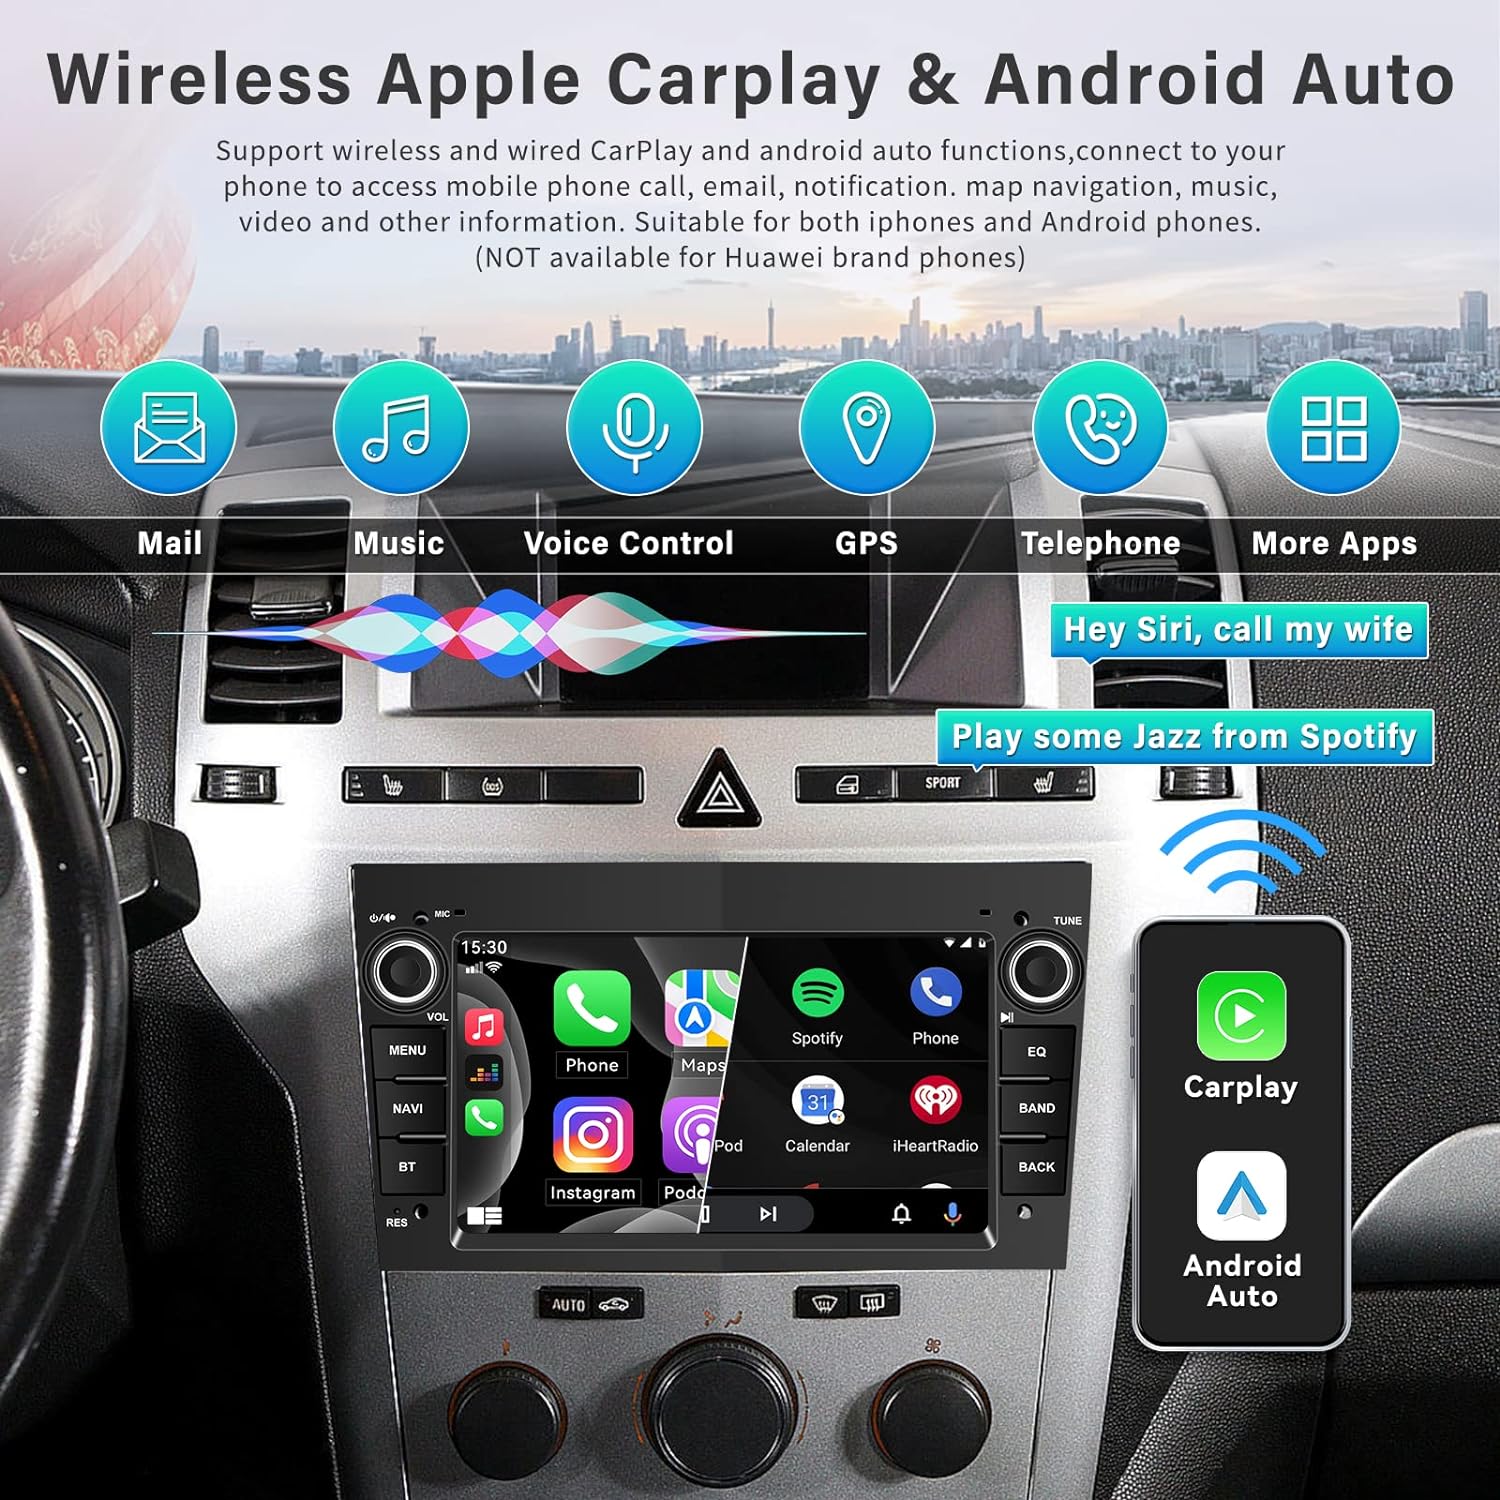 [2+32GB]CAMECHO Android 11 Car Stereo Radio with Wireless Carplay Android Auto for Opel Vauxhall Corsa Astra Vivaro Zafira 7” Touchscreen with Reverse Camera GPS Sat Nav WiFi HiFi Bluetooth FM RDS SWC